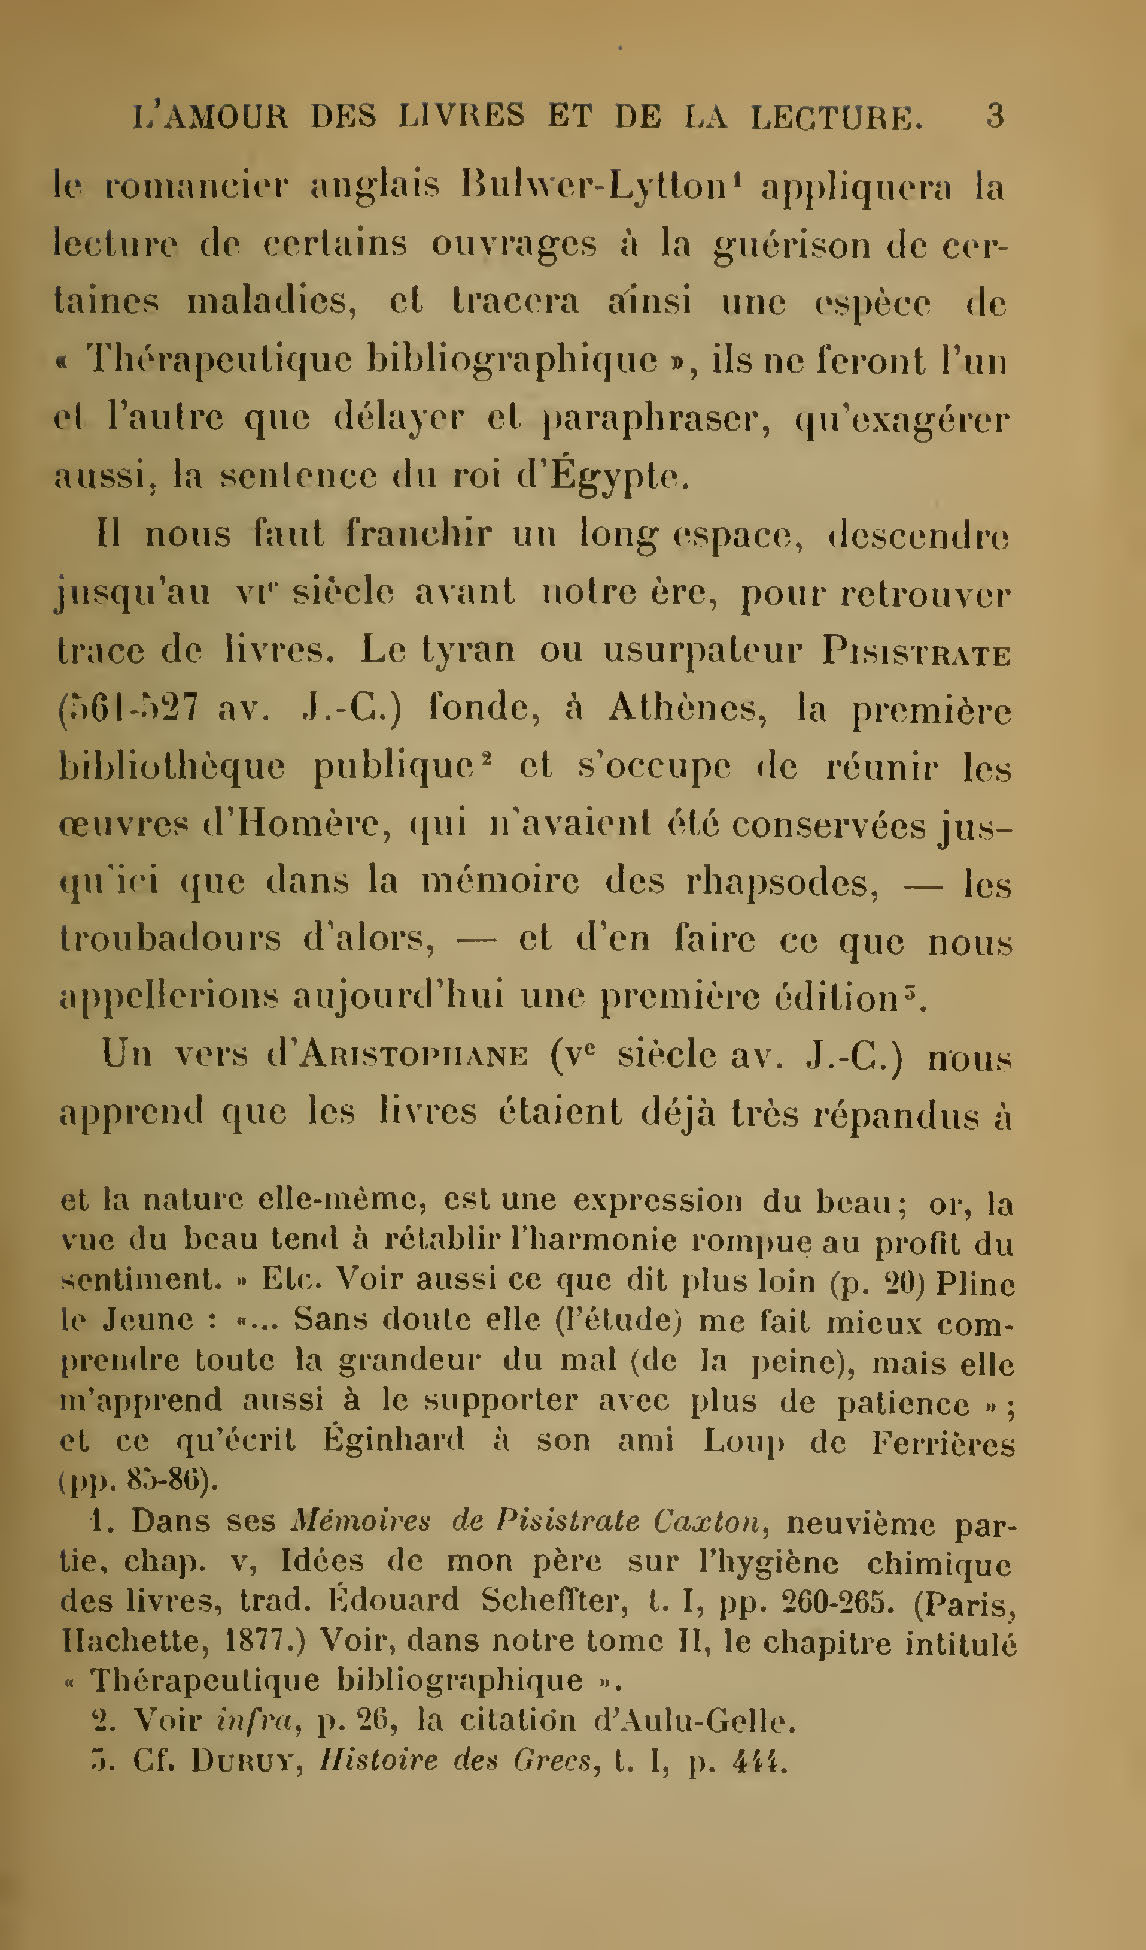 Albert Cim, Le Livre, t. I, p. 3.